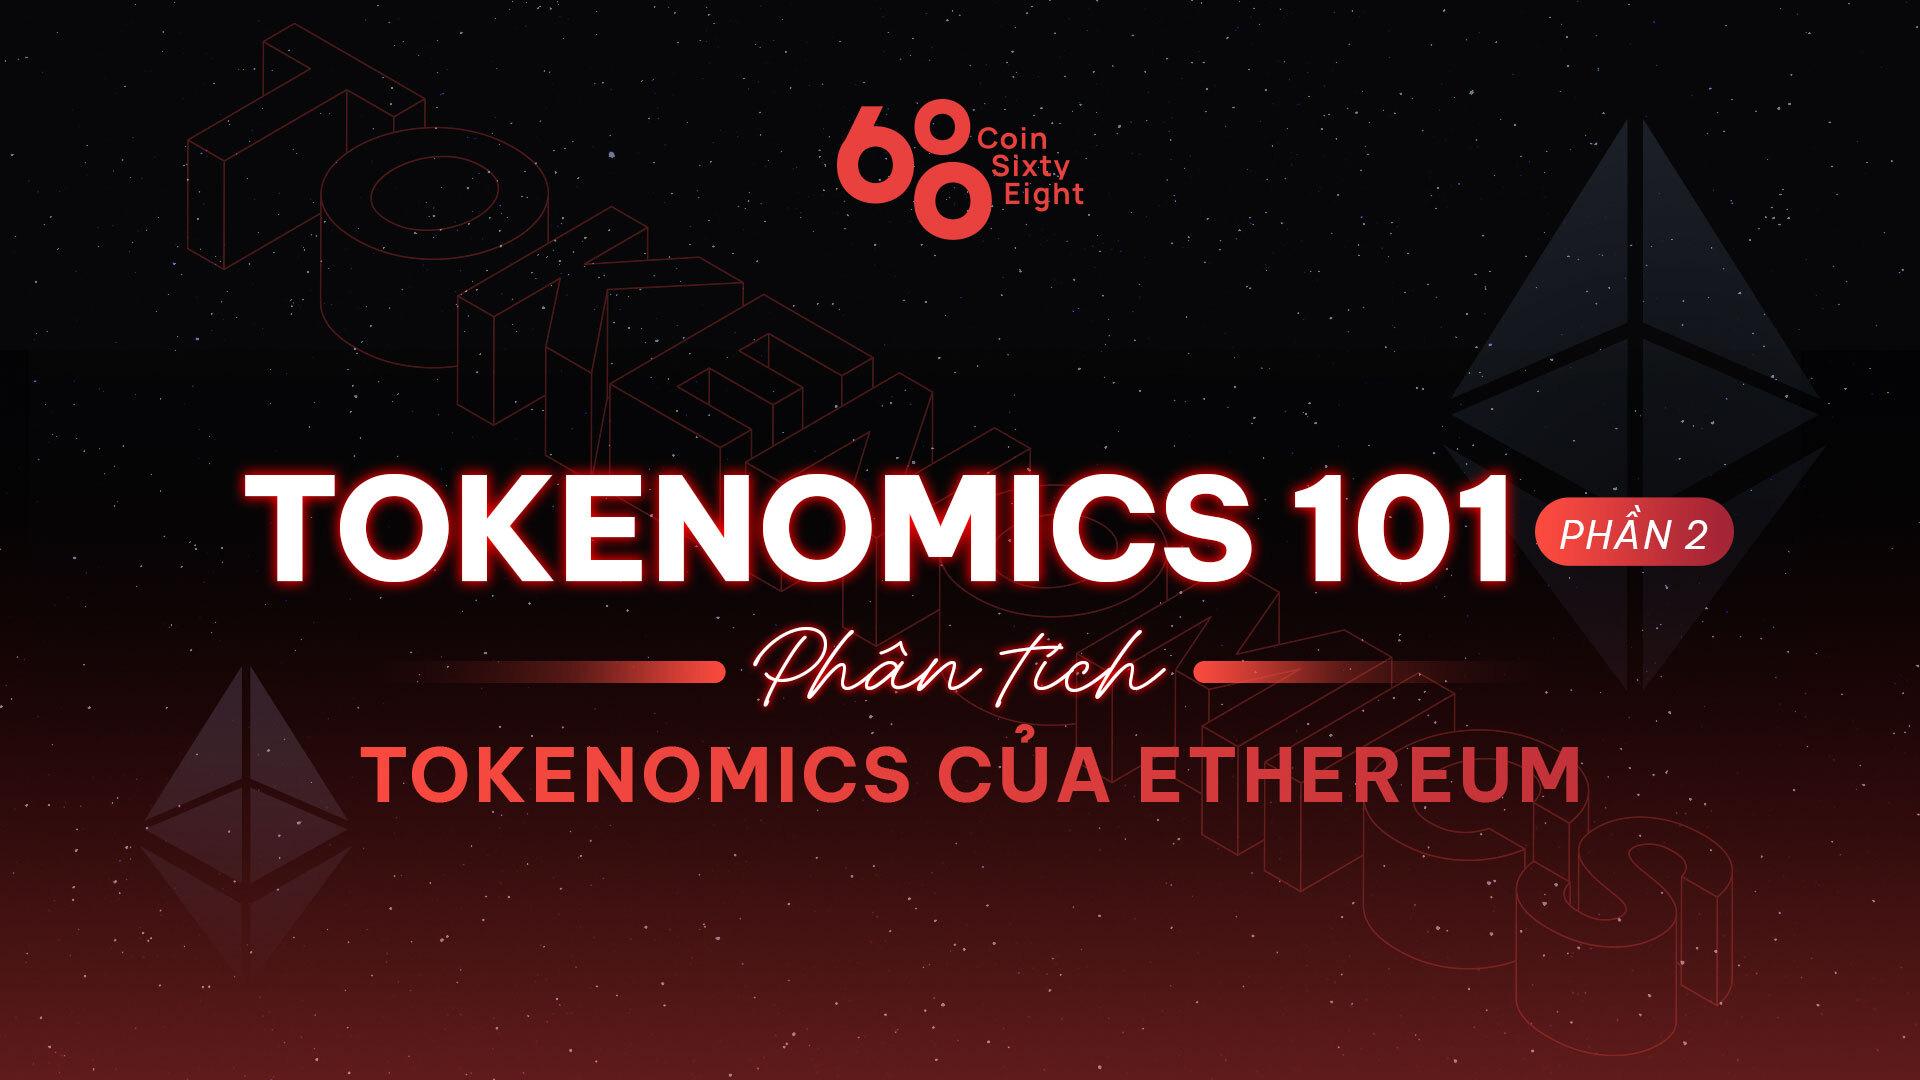 tokenomics-101-phan-2-phan-tich-tokenomics-cua-ethereum